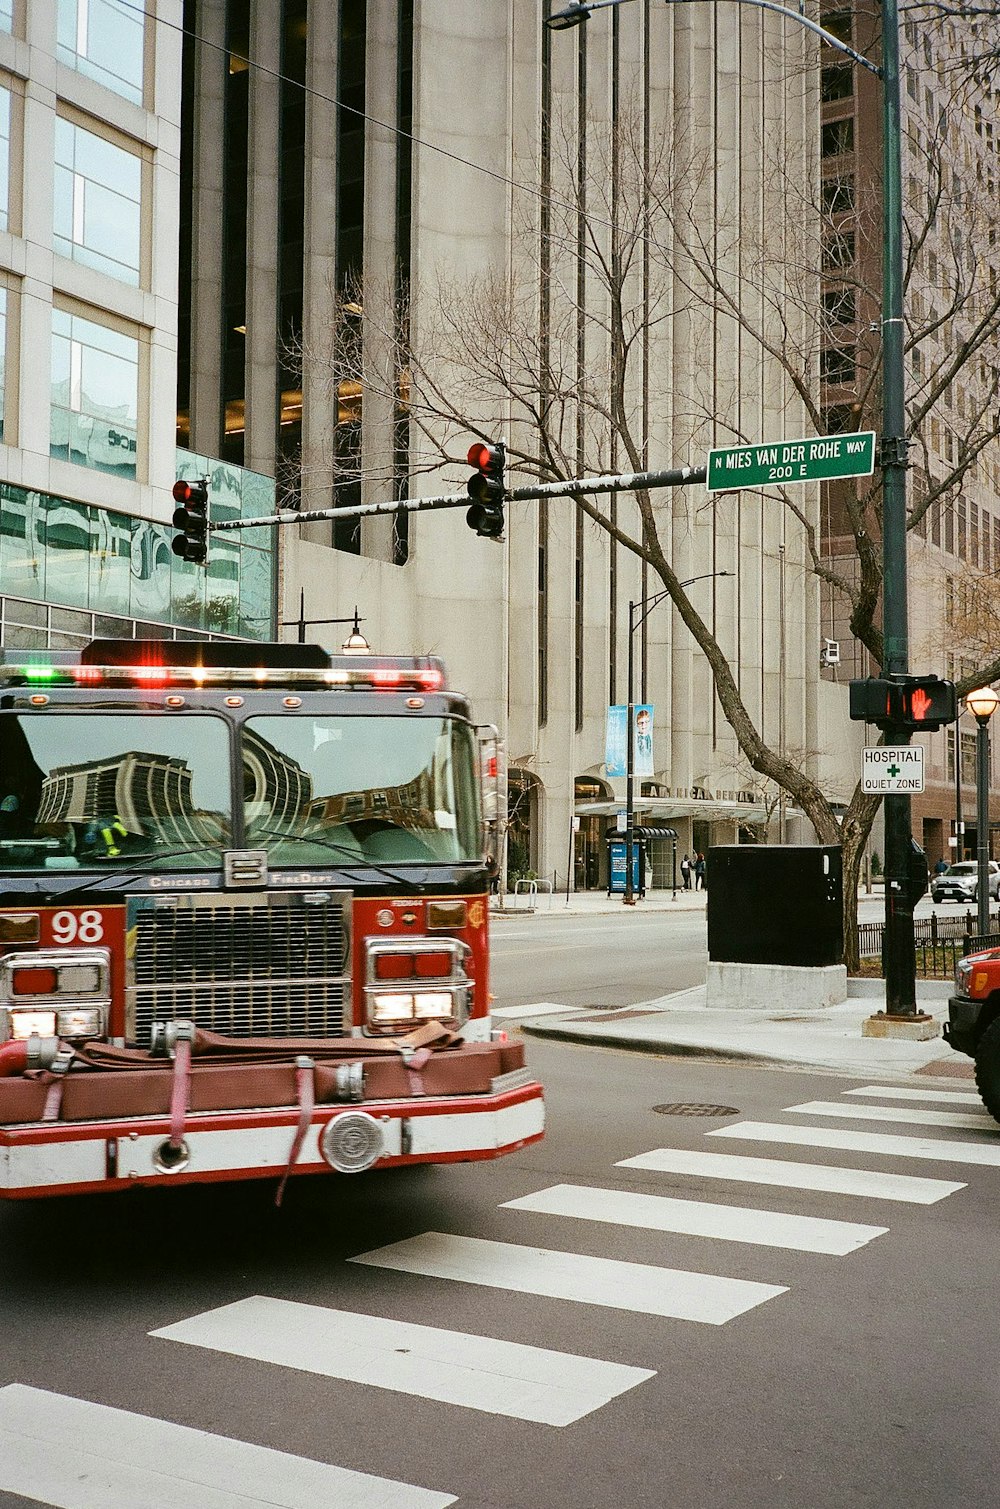 a fire truck driving down a street next to a tall building